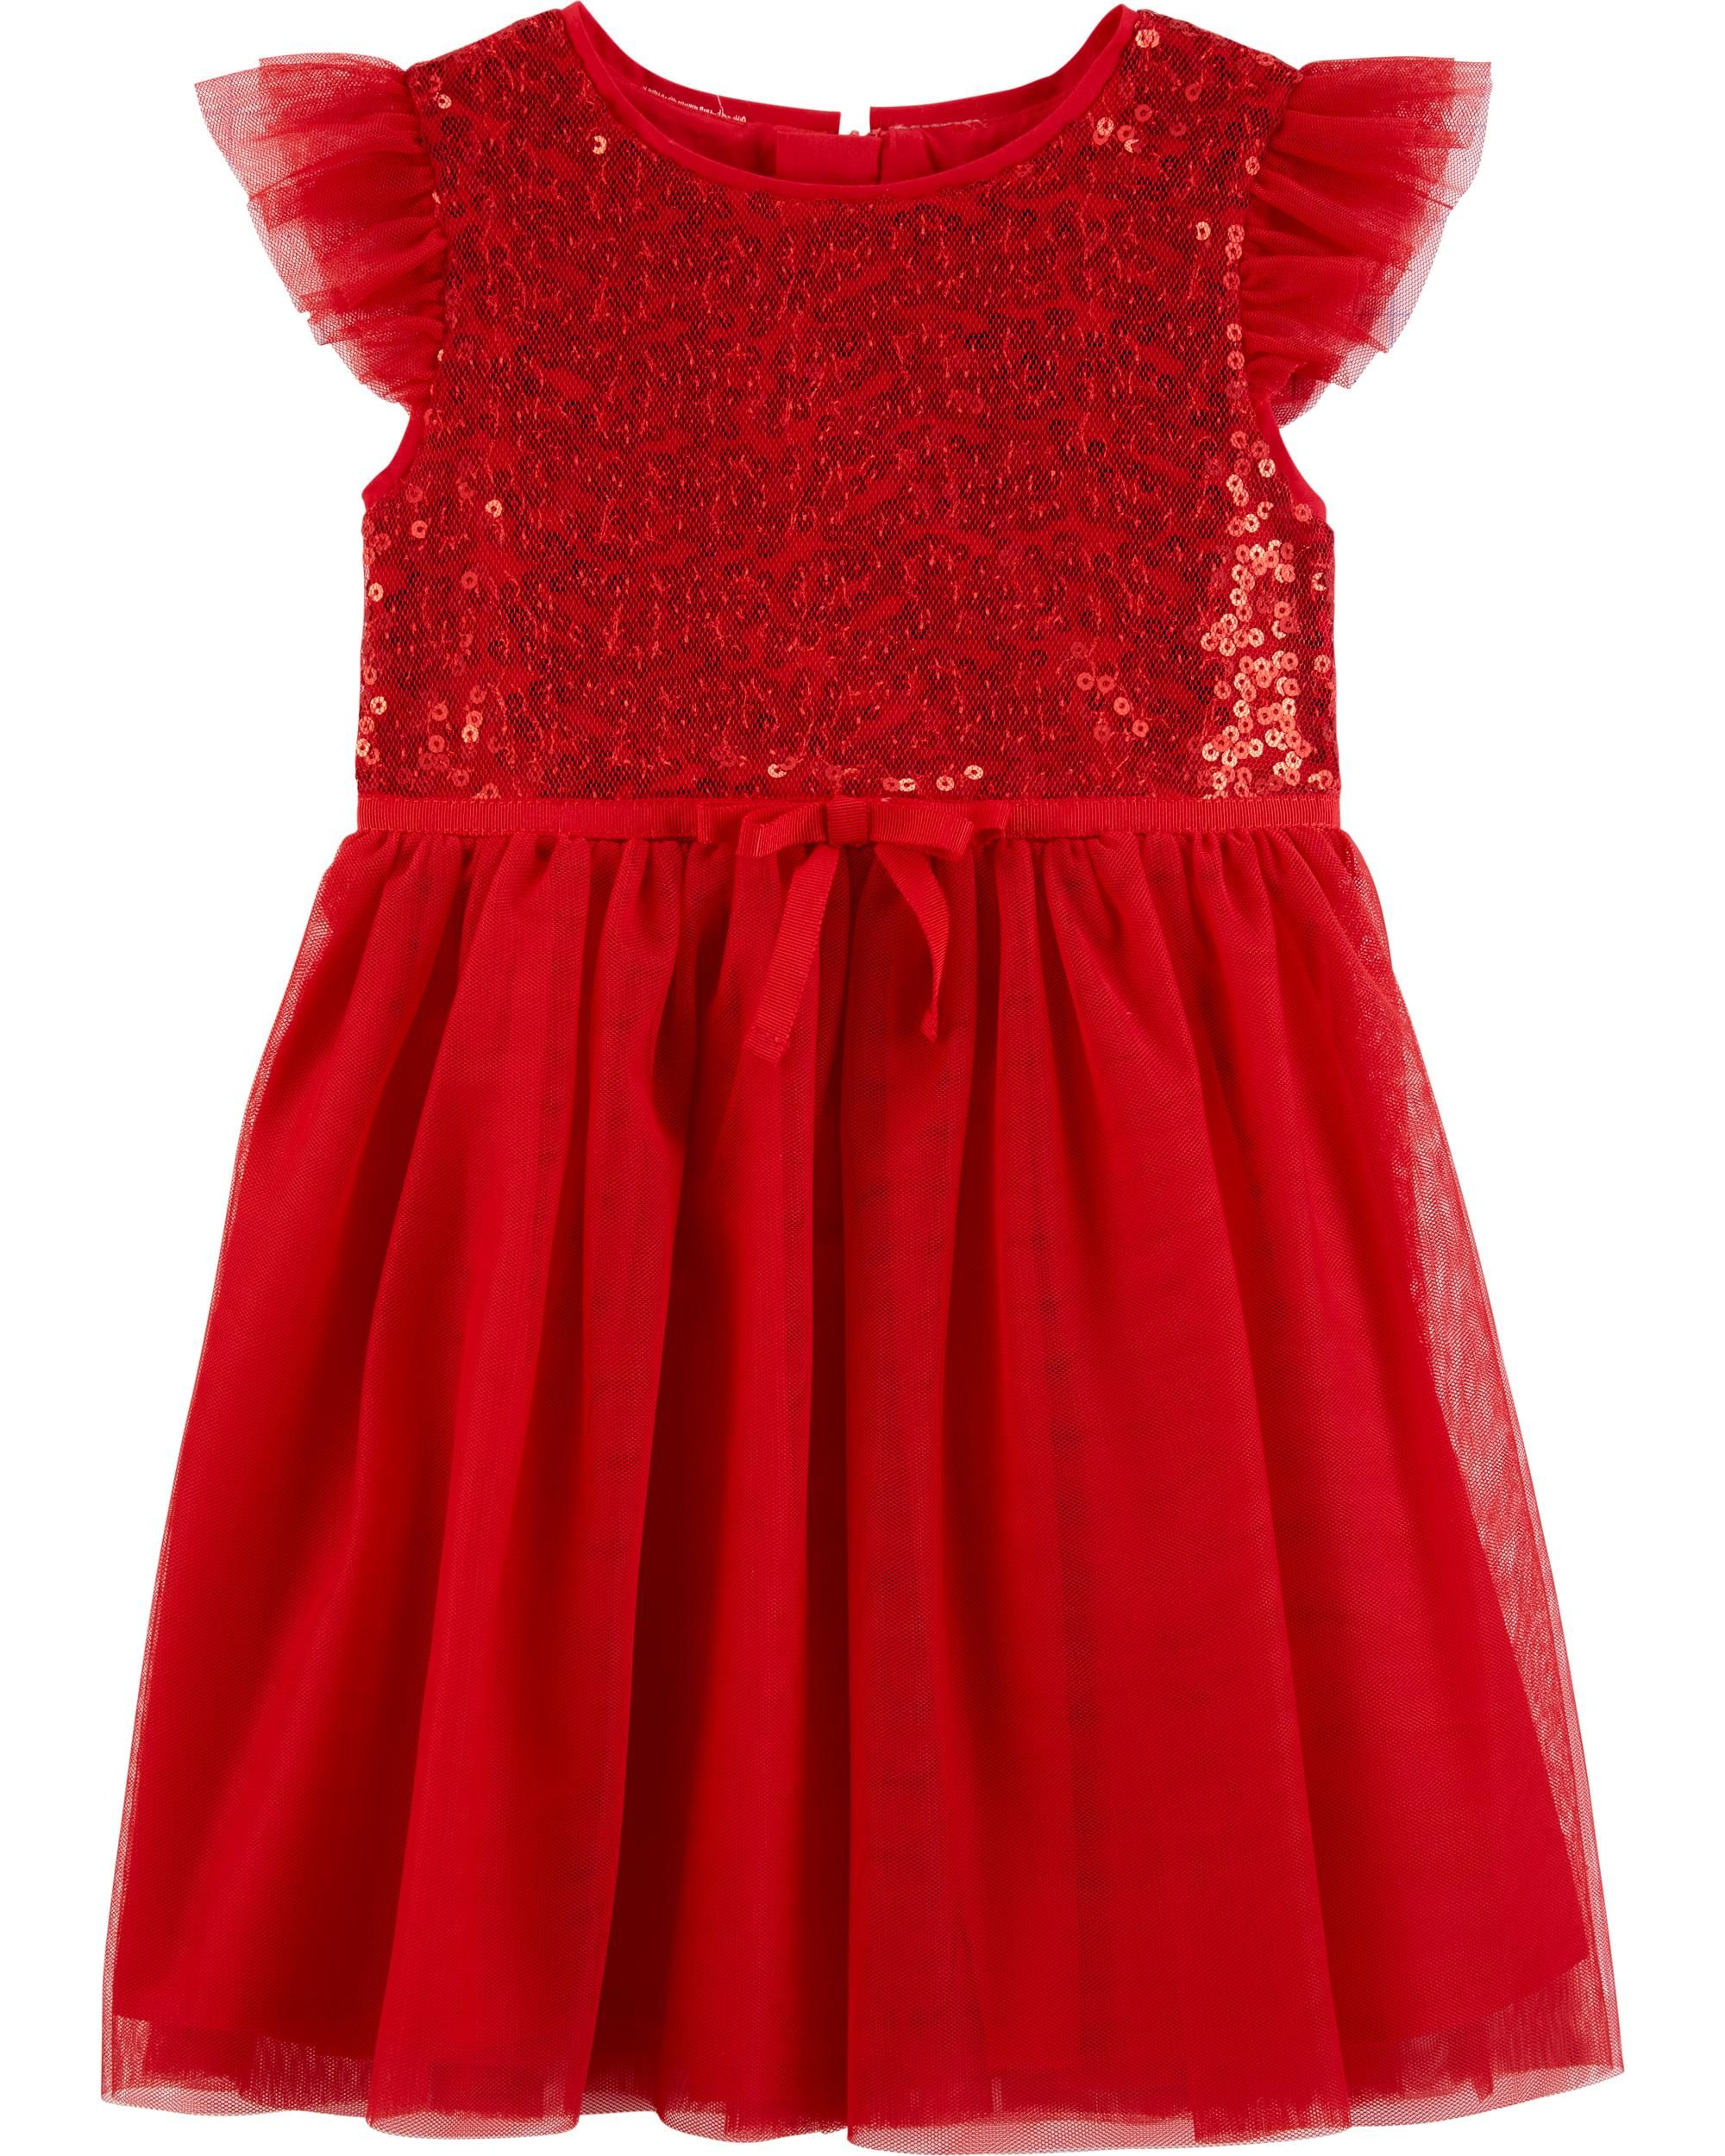 Sequin Tulle Dress | carters.com | Carter's